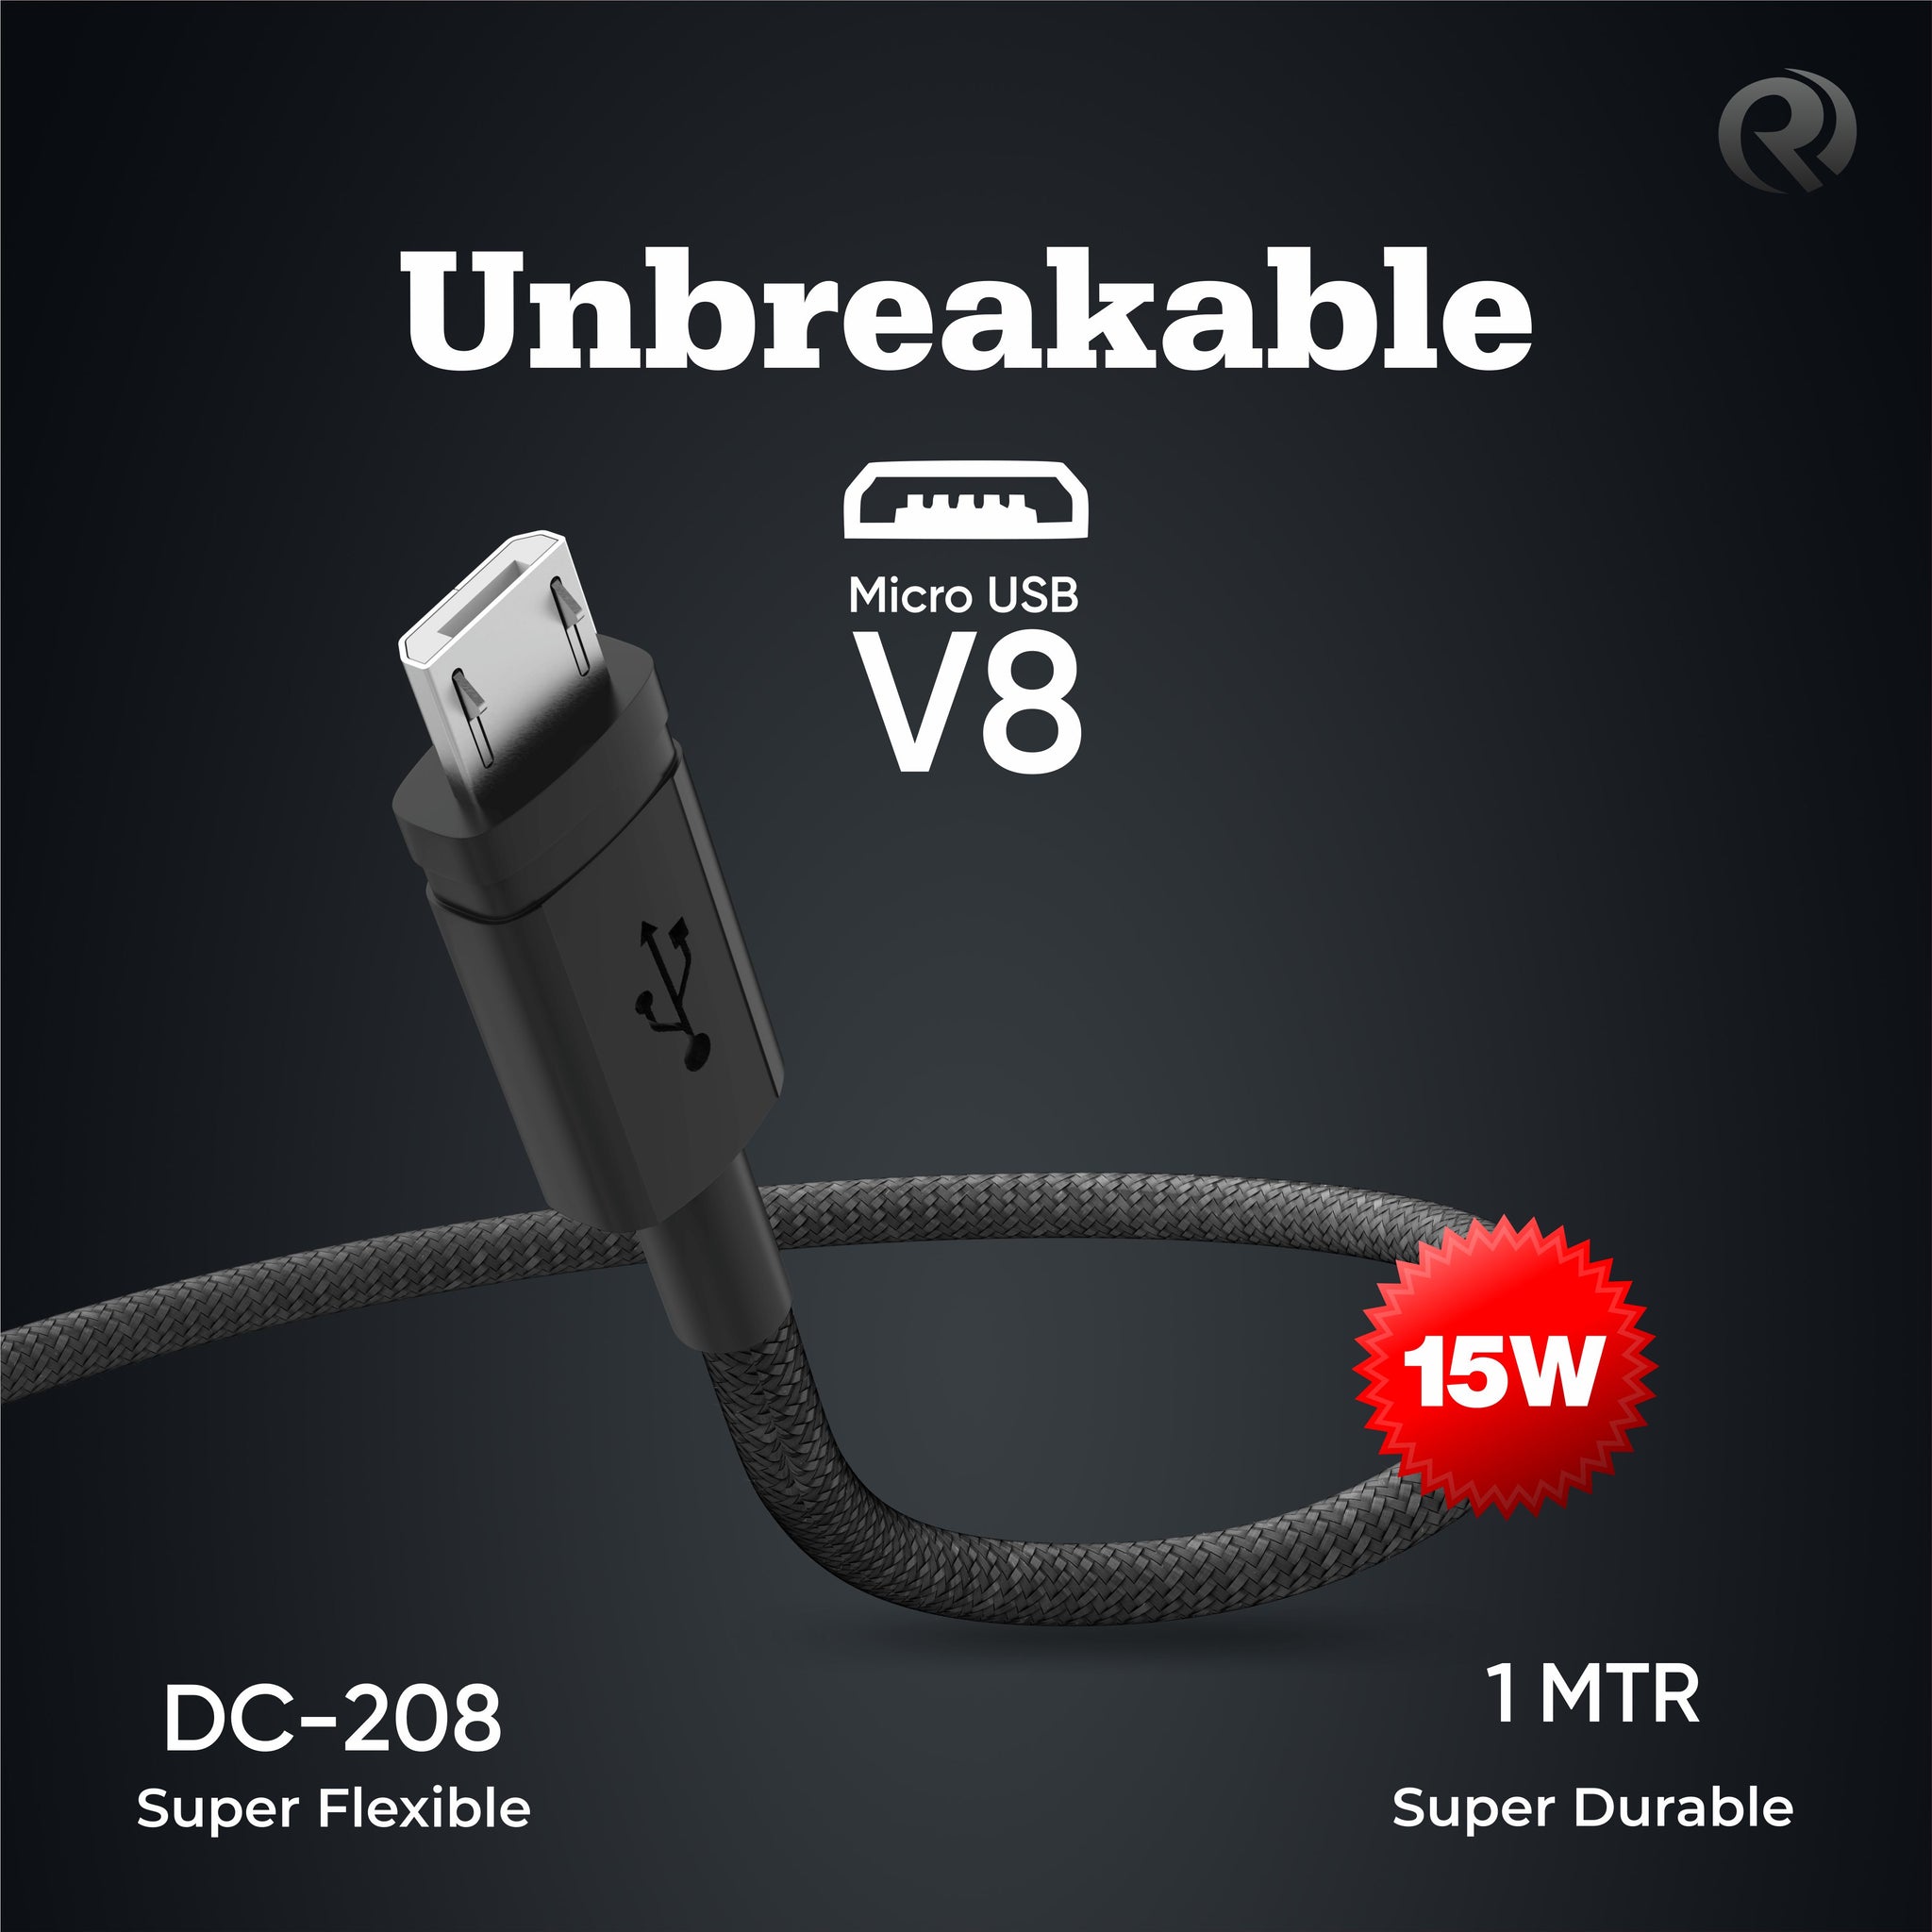 DC-208 Micro USB V8 15Watt Unbreakable Braided Cable